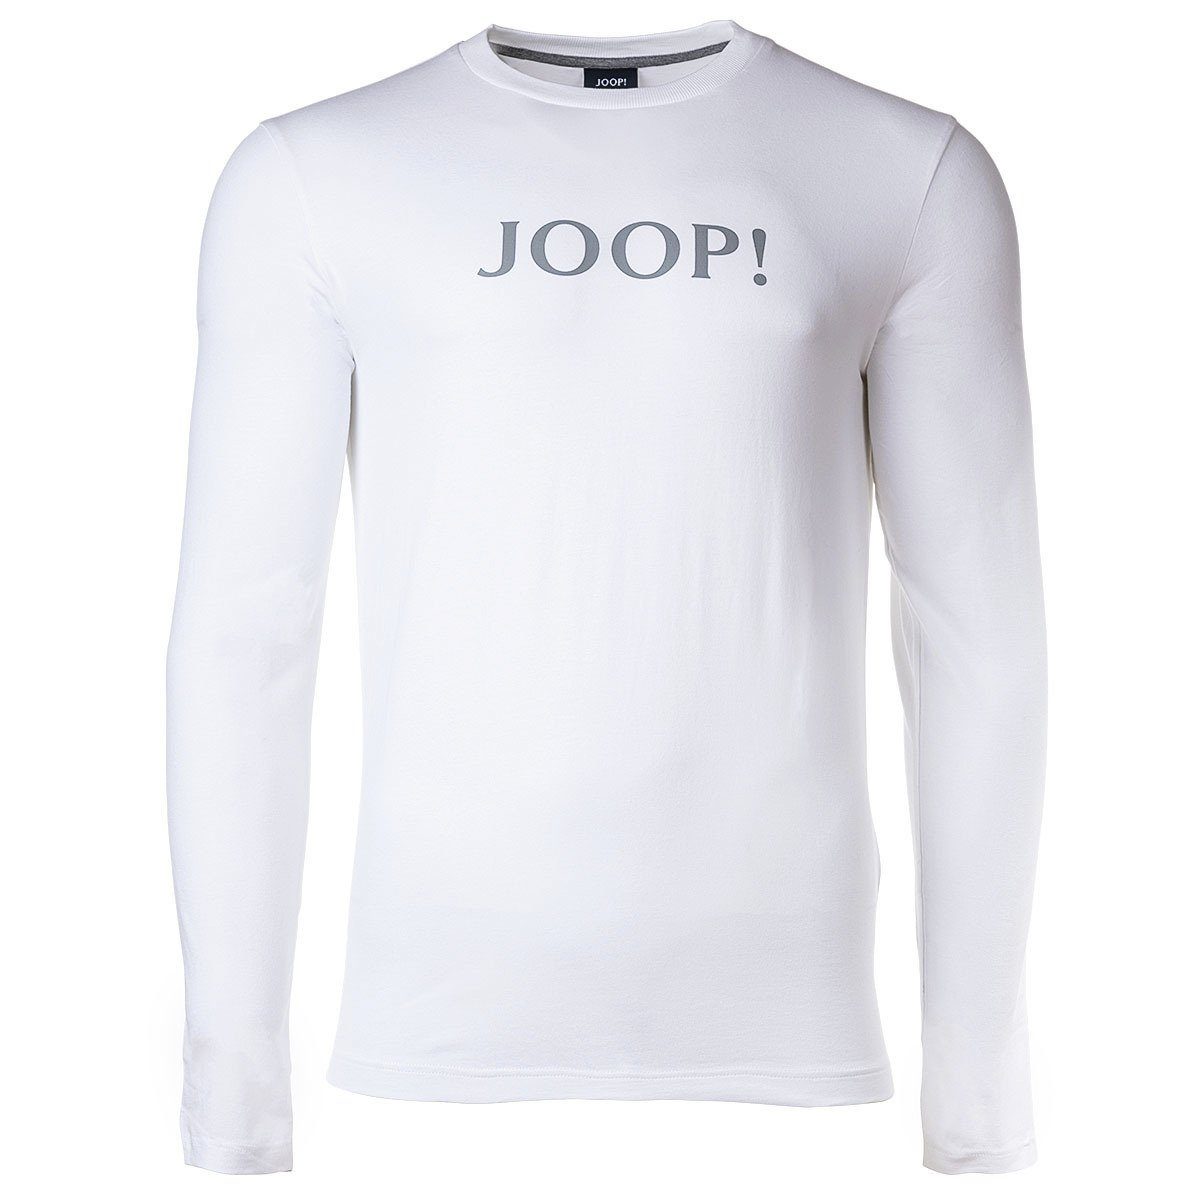 Weiß Langarm-Shirt Loungewear, T-Shirt - Rundhals Herren Joop!